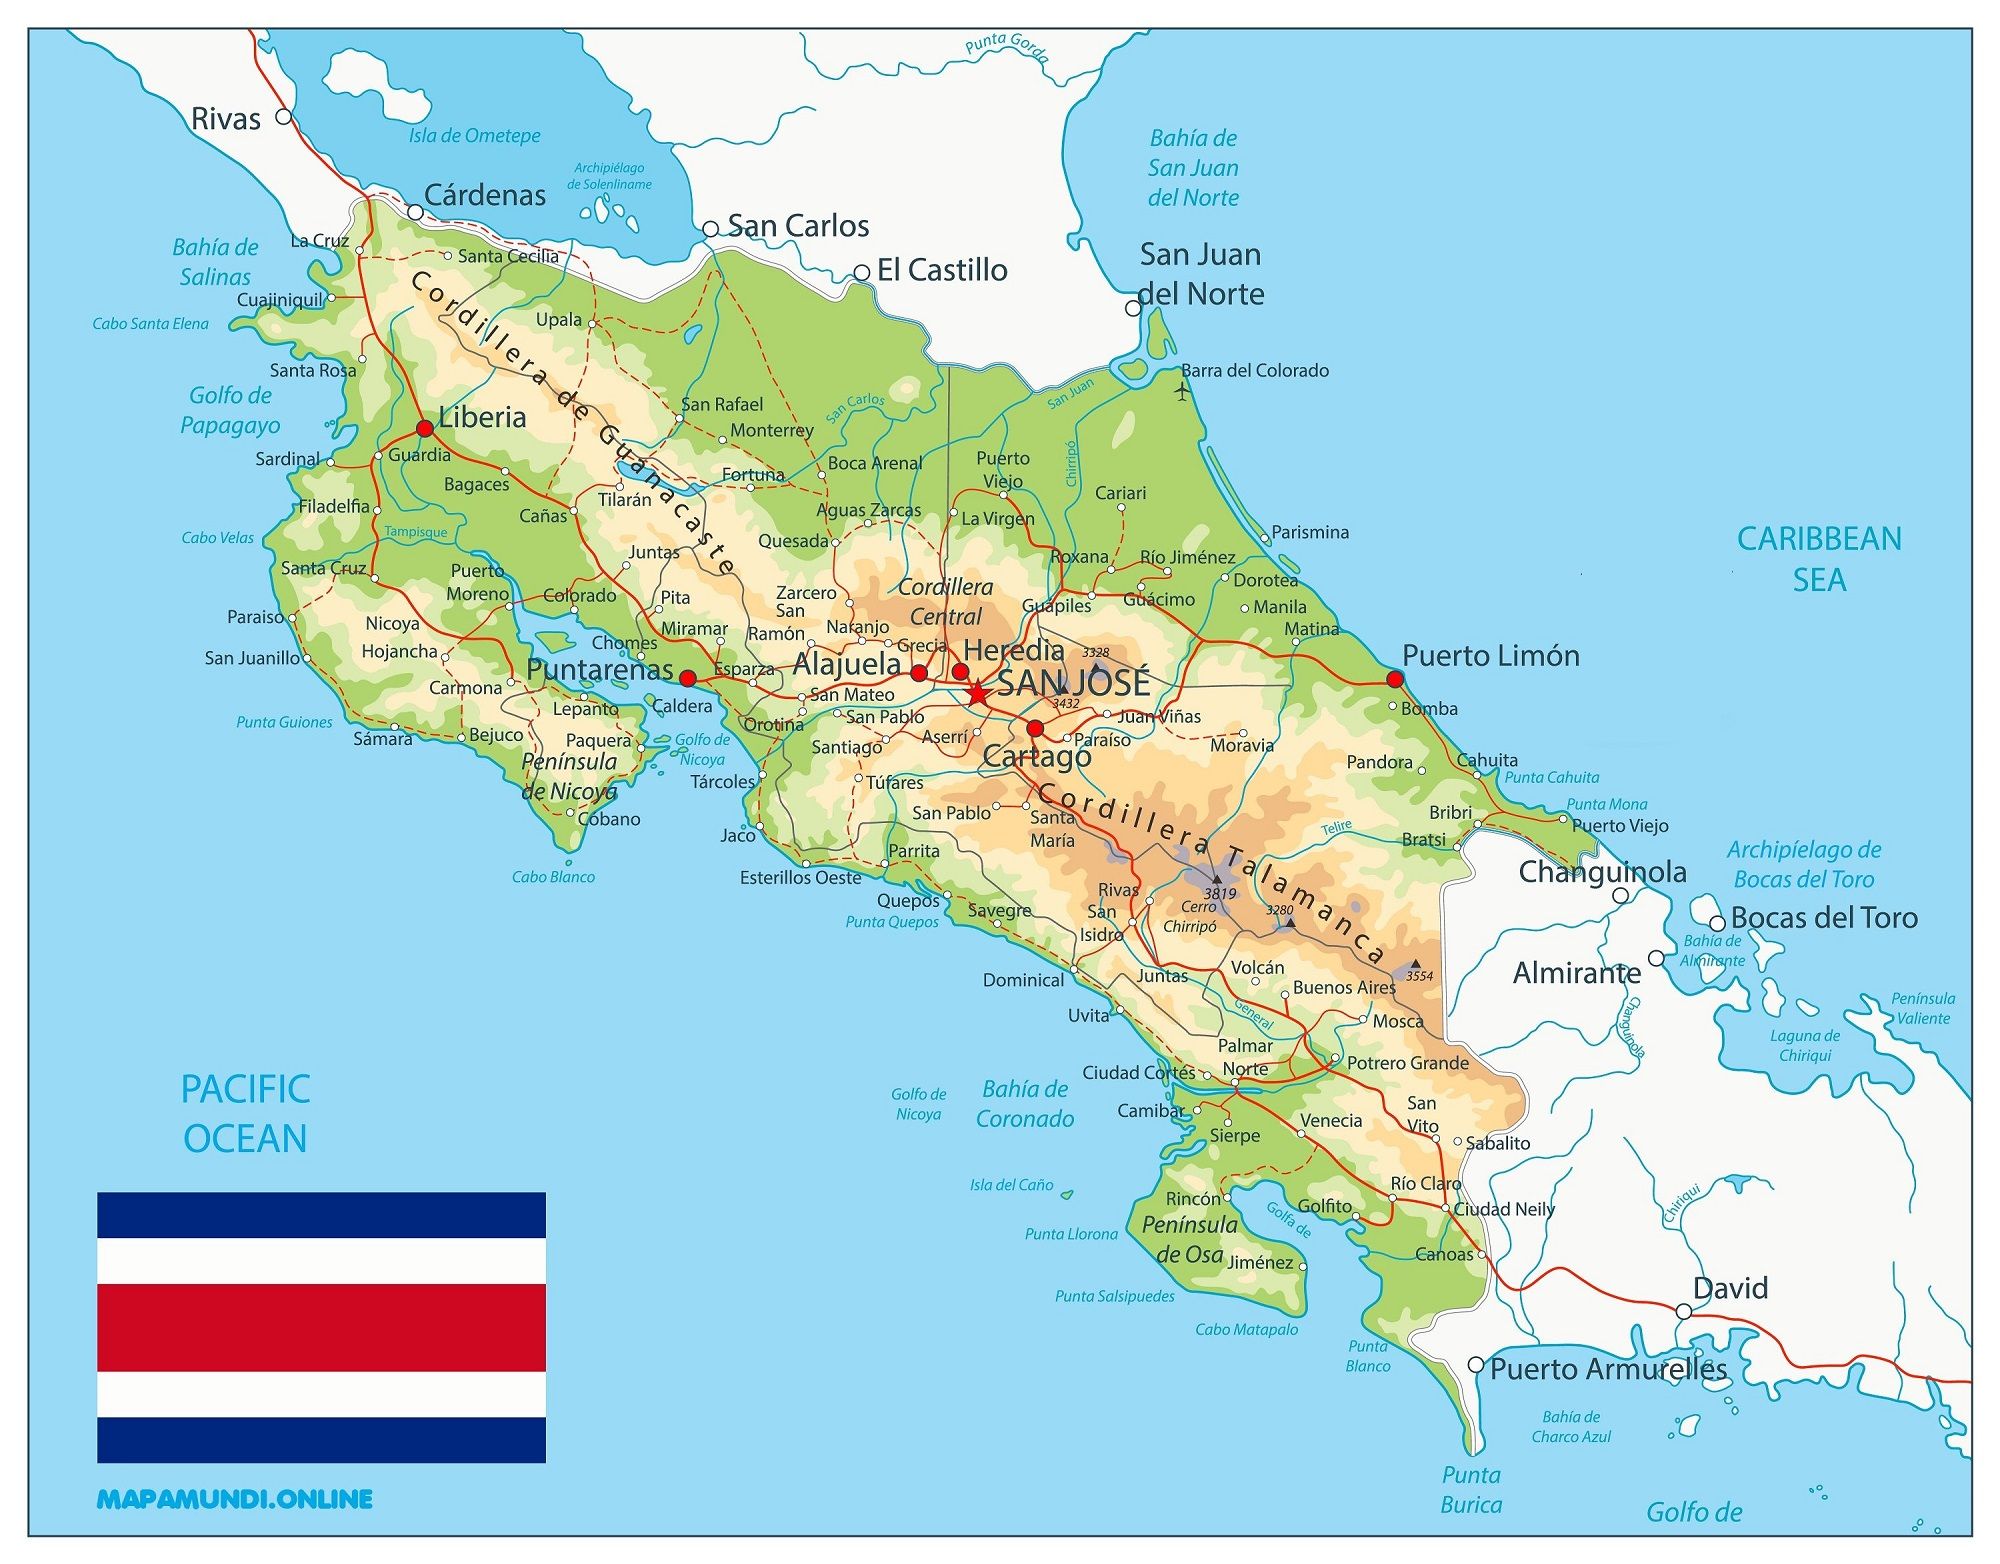 Mapa De Costa Rica